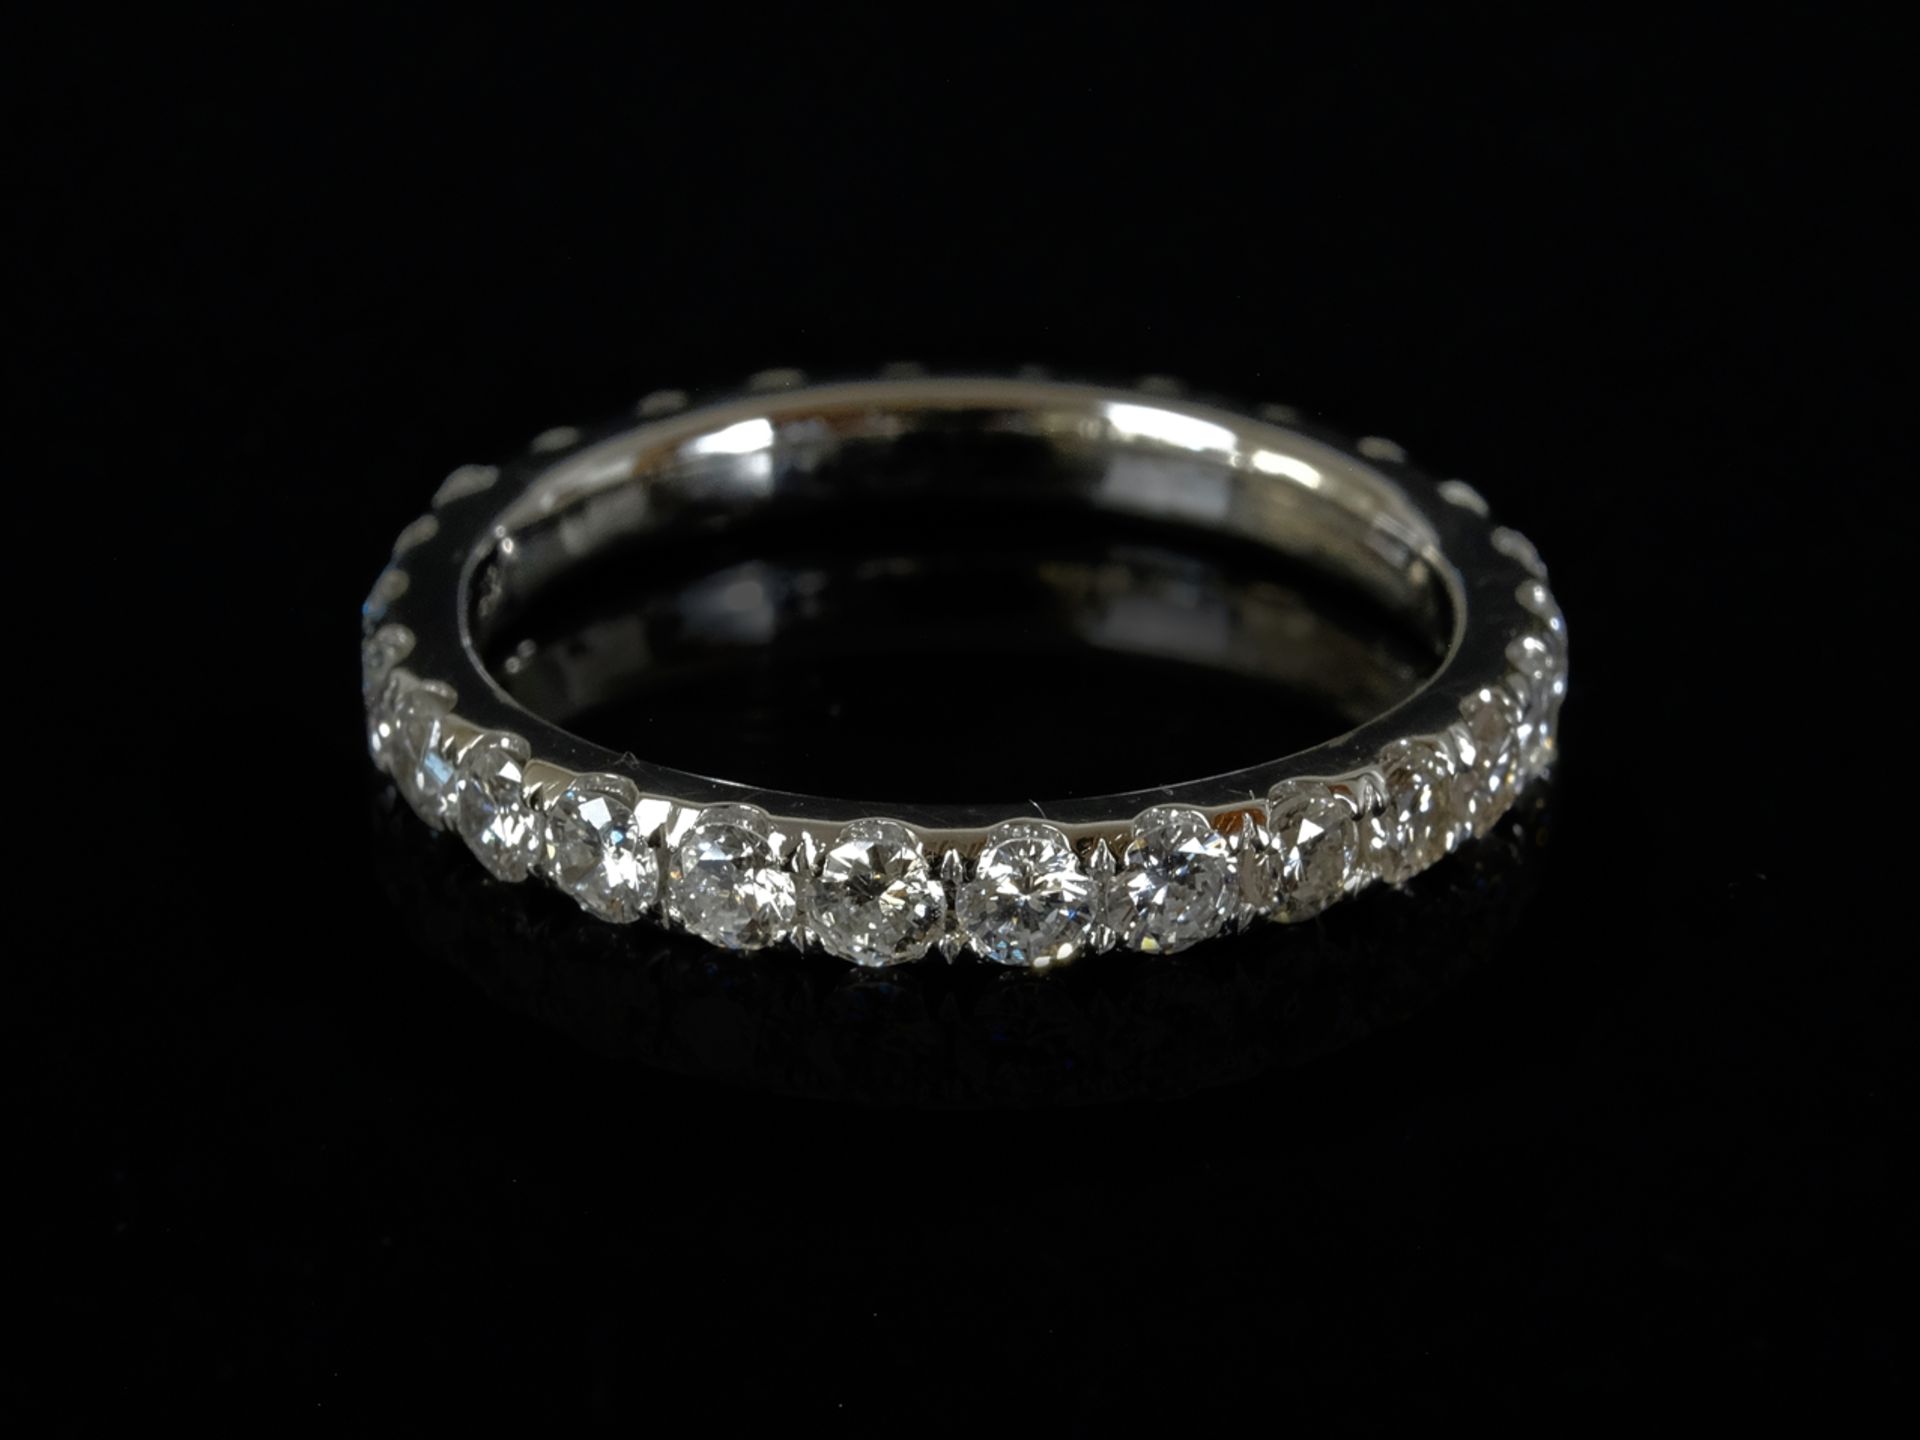 PLEASANT BRILLIANT MEMORY RING, set all around with 26 brilliant-cut diamonds, total around 1.38ct,